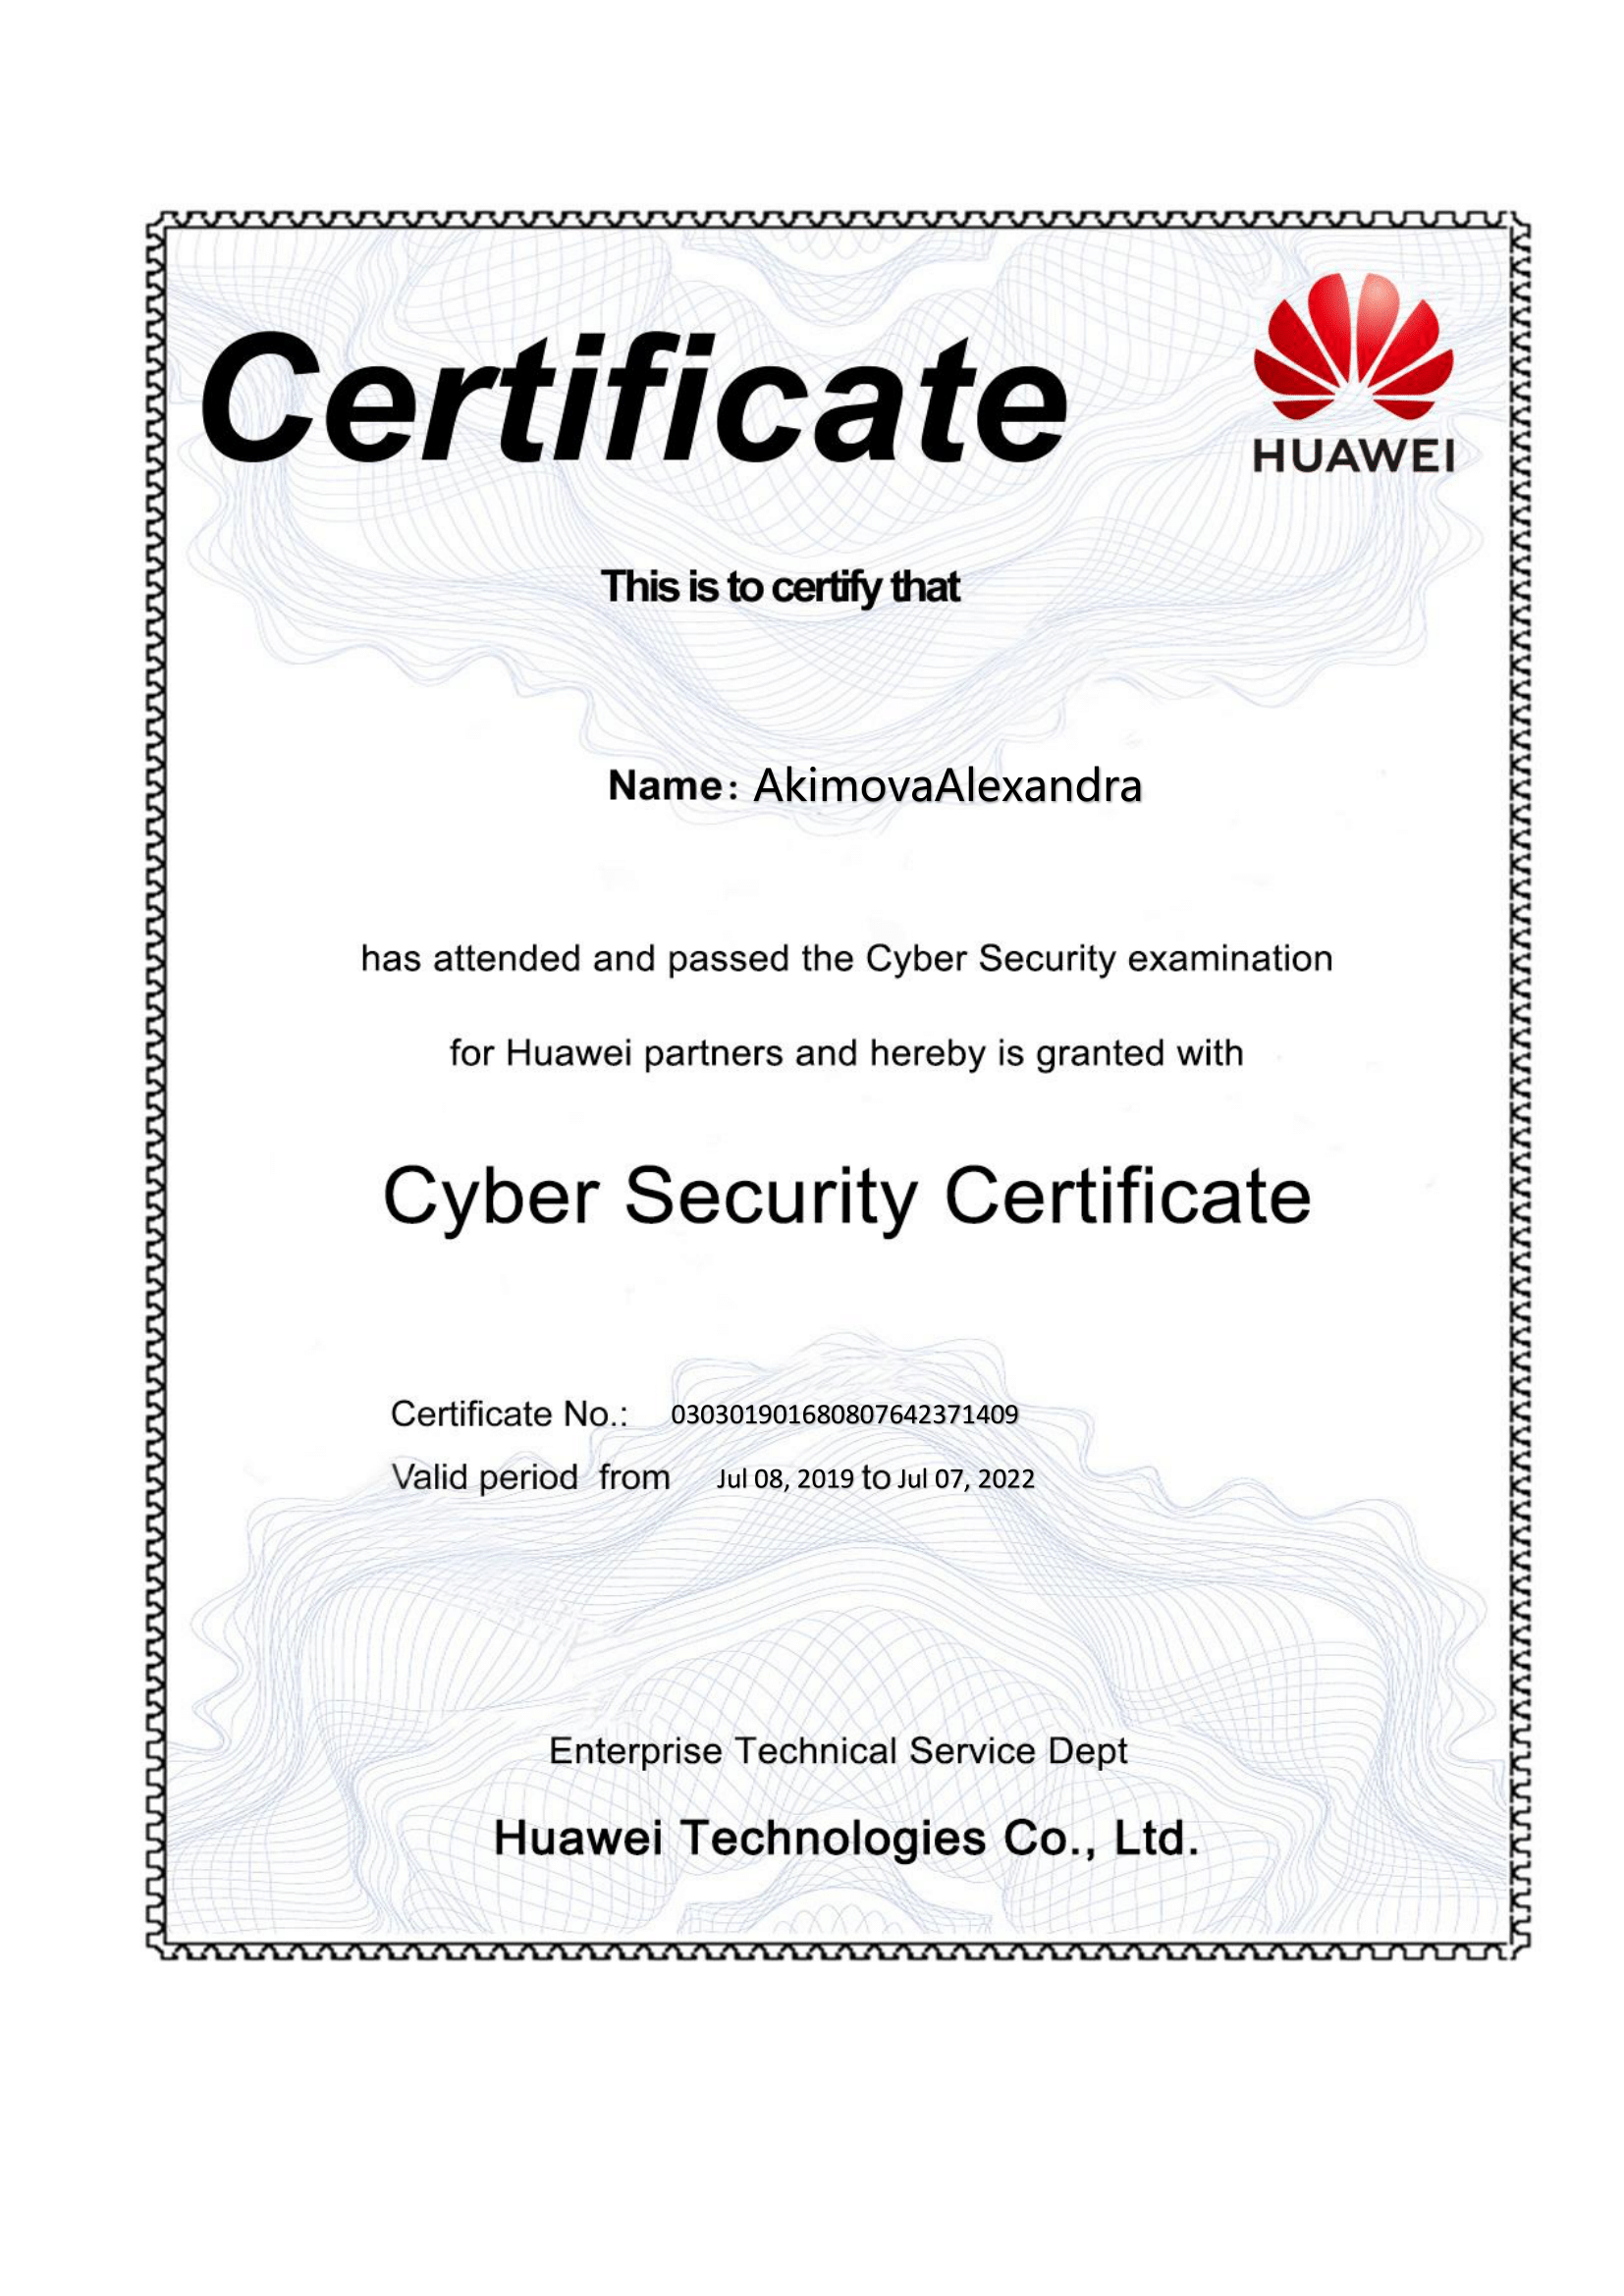 Cyber Security Certificate Huawei